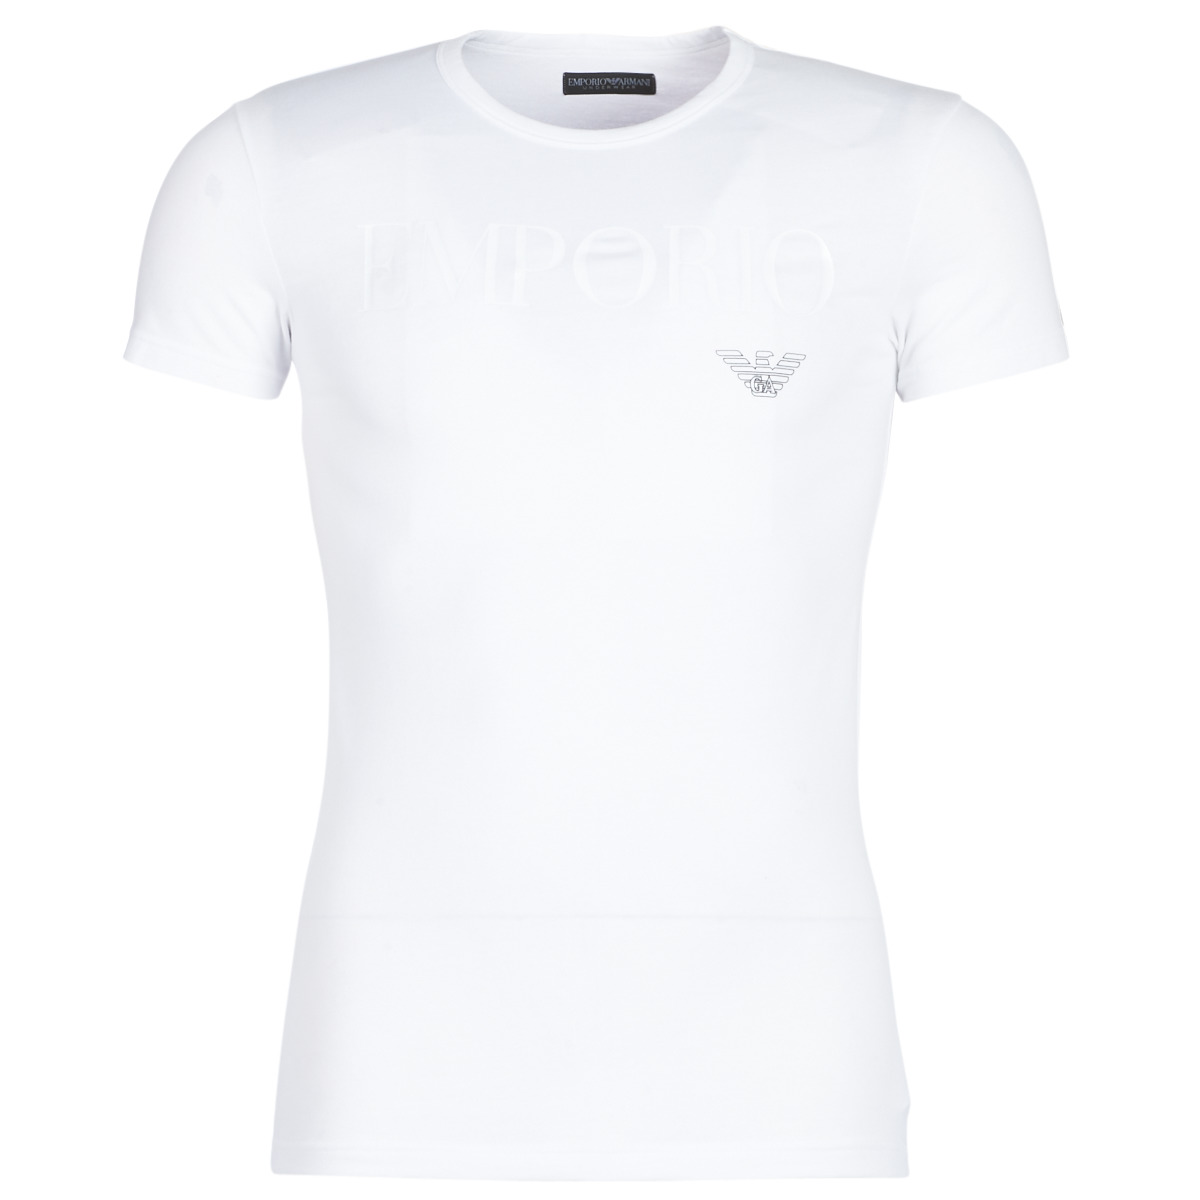 Emporio Armani  T-shirt με κοντά μανίκια Emporio Armani CC716-111035-00010